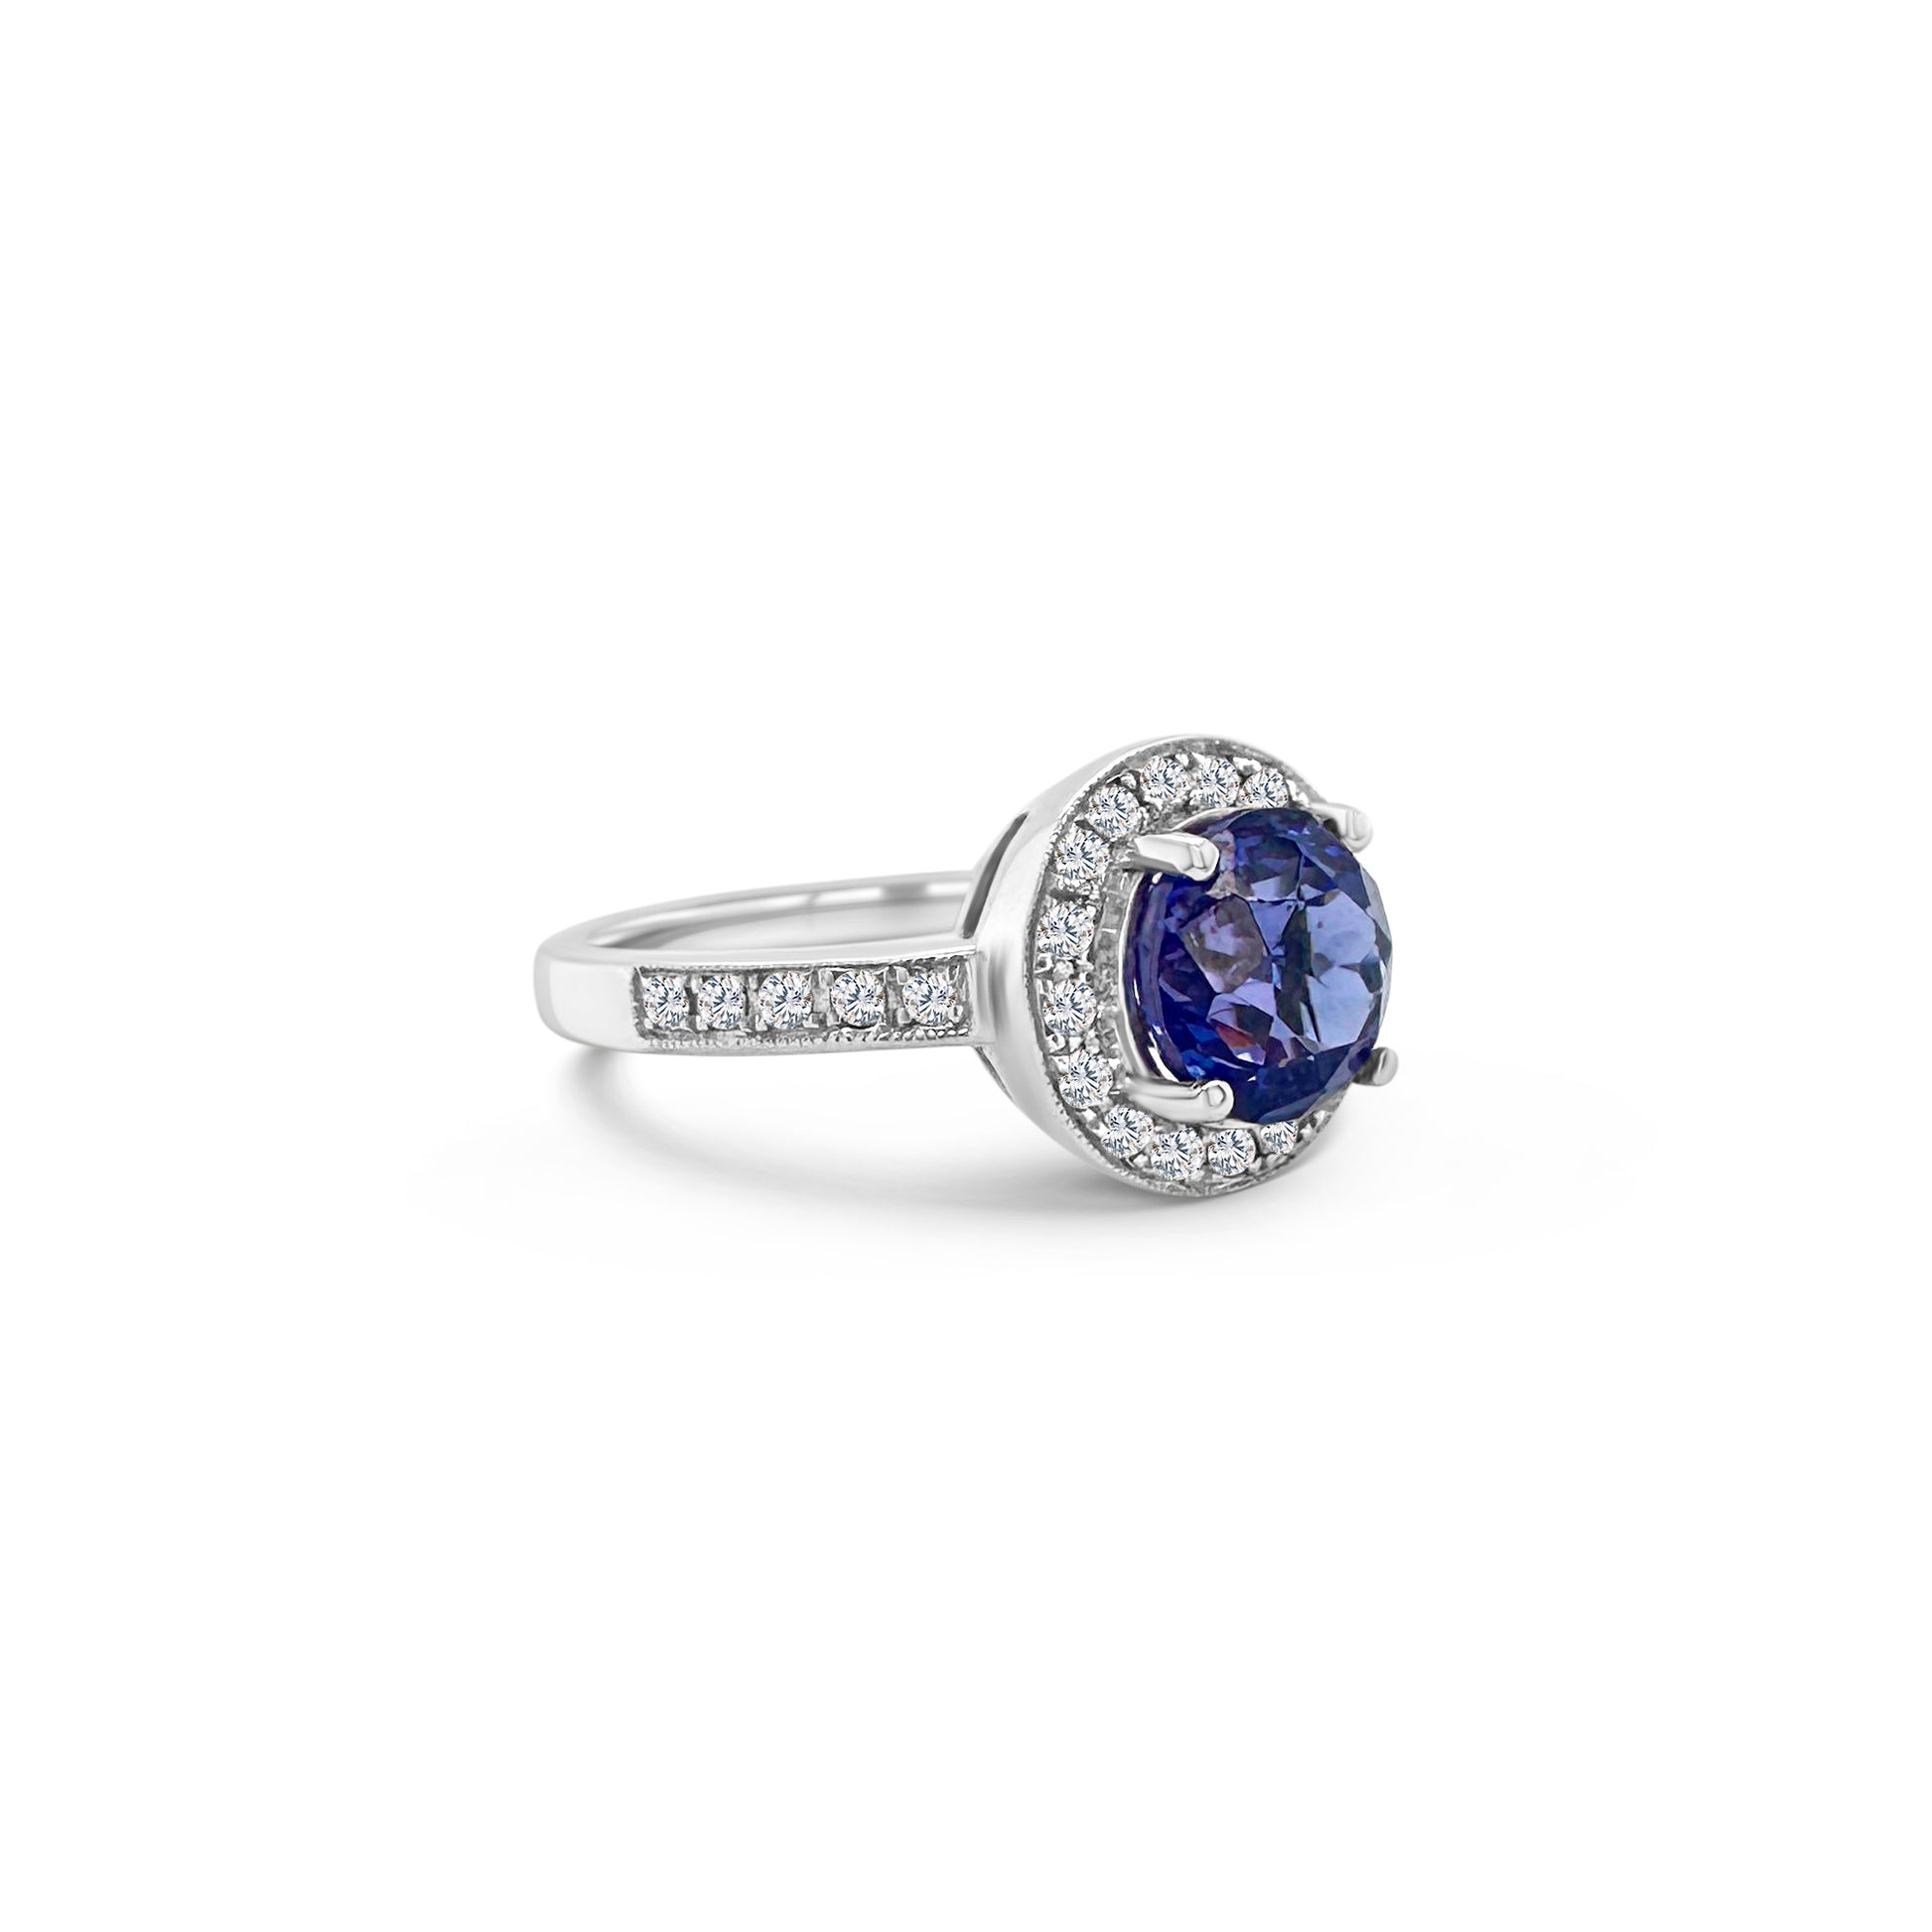 Round Tanzanite & Diamond Halo Ring: tanzanite ring, diamond halo, round cut gemstone, jewelry, gemstone ring, halo ring, blue gemstone, diamond accents, precious stone, fine jewelry.